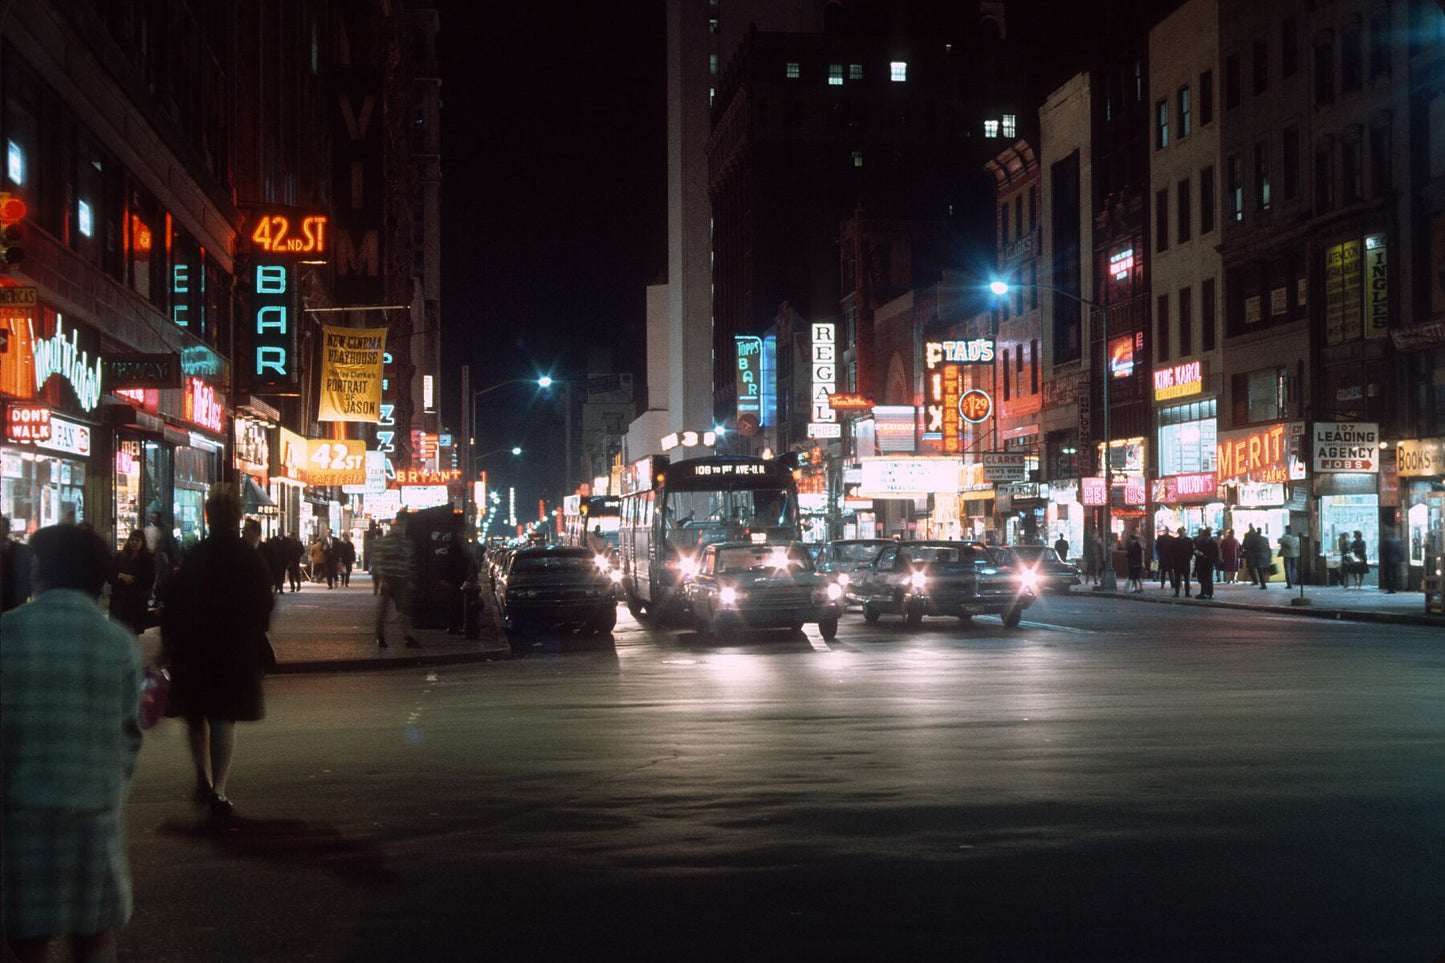 New York City Streets at Night by Gerry Cranham - November 1967 